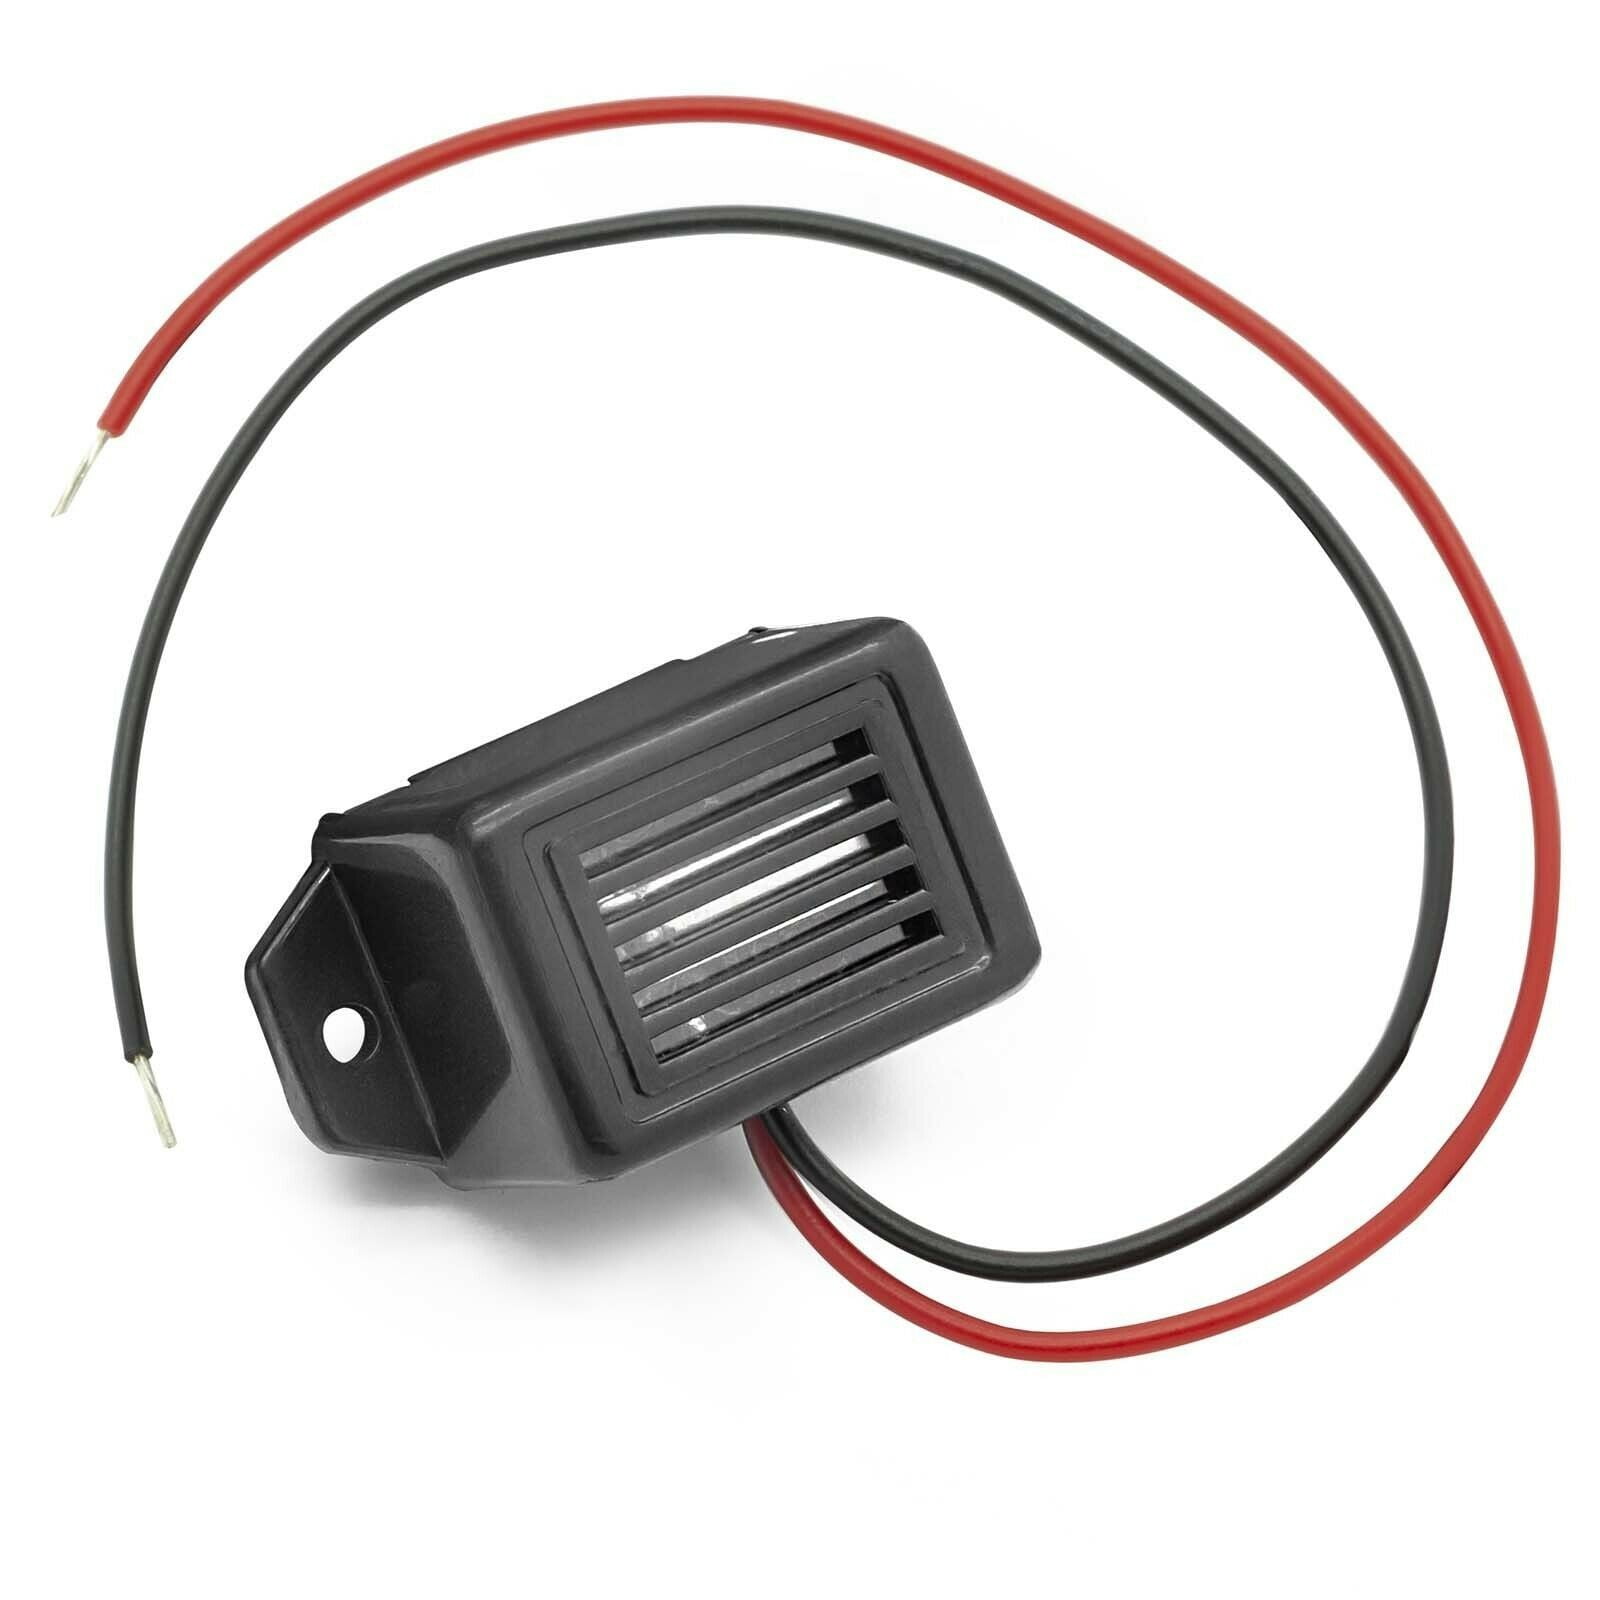 Car Light Off Warner Control Buzzer Beeper 12V Adapter Cable 